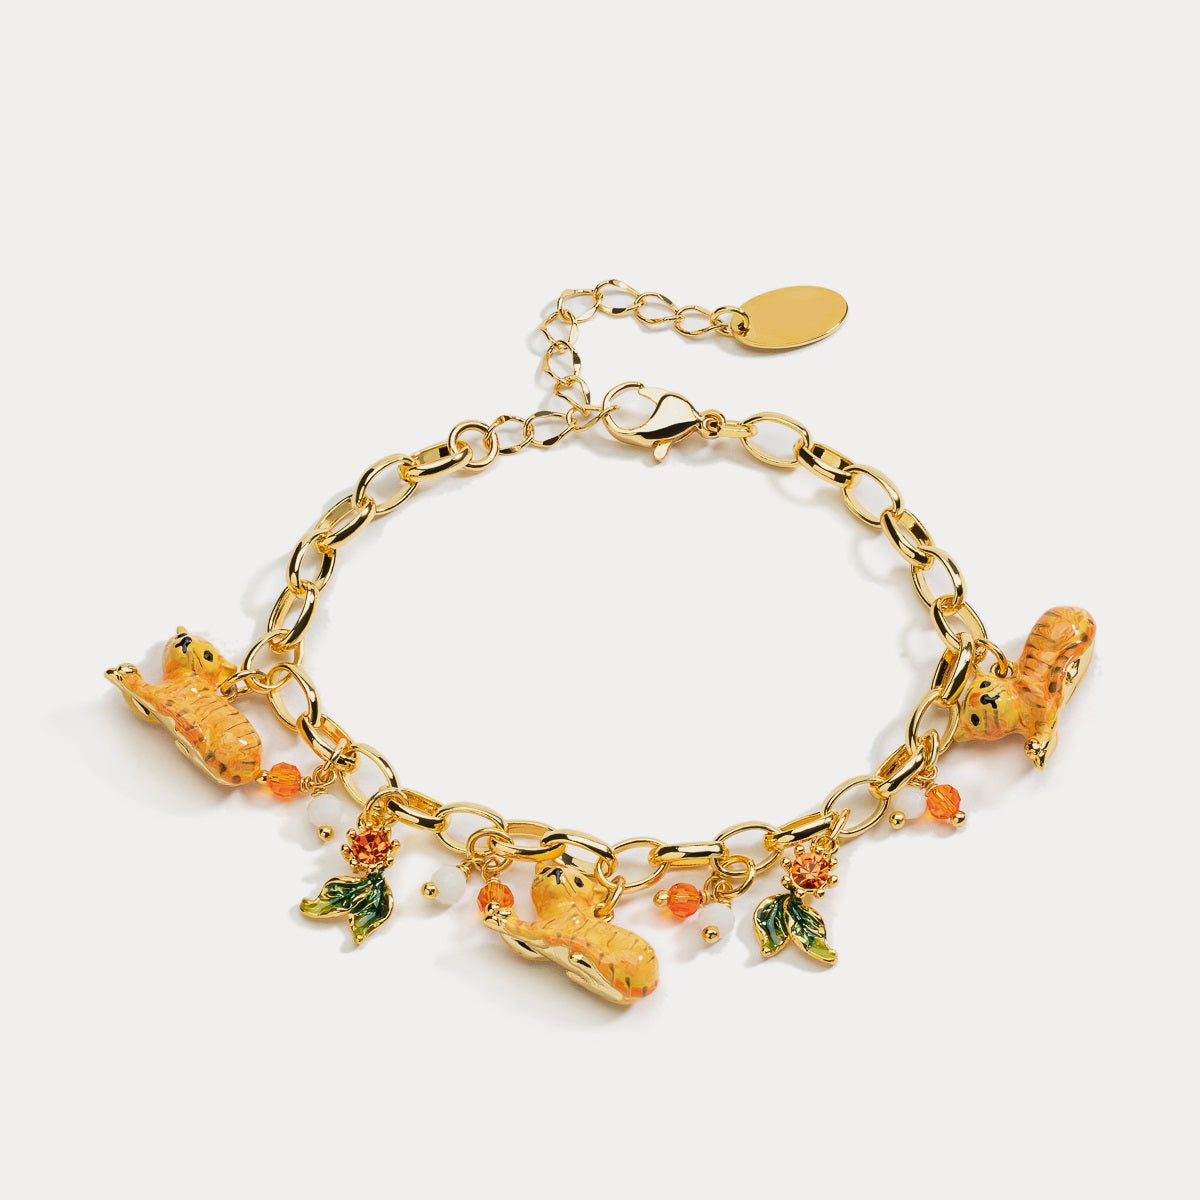 Tiger zodiac bracelet